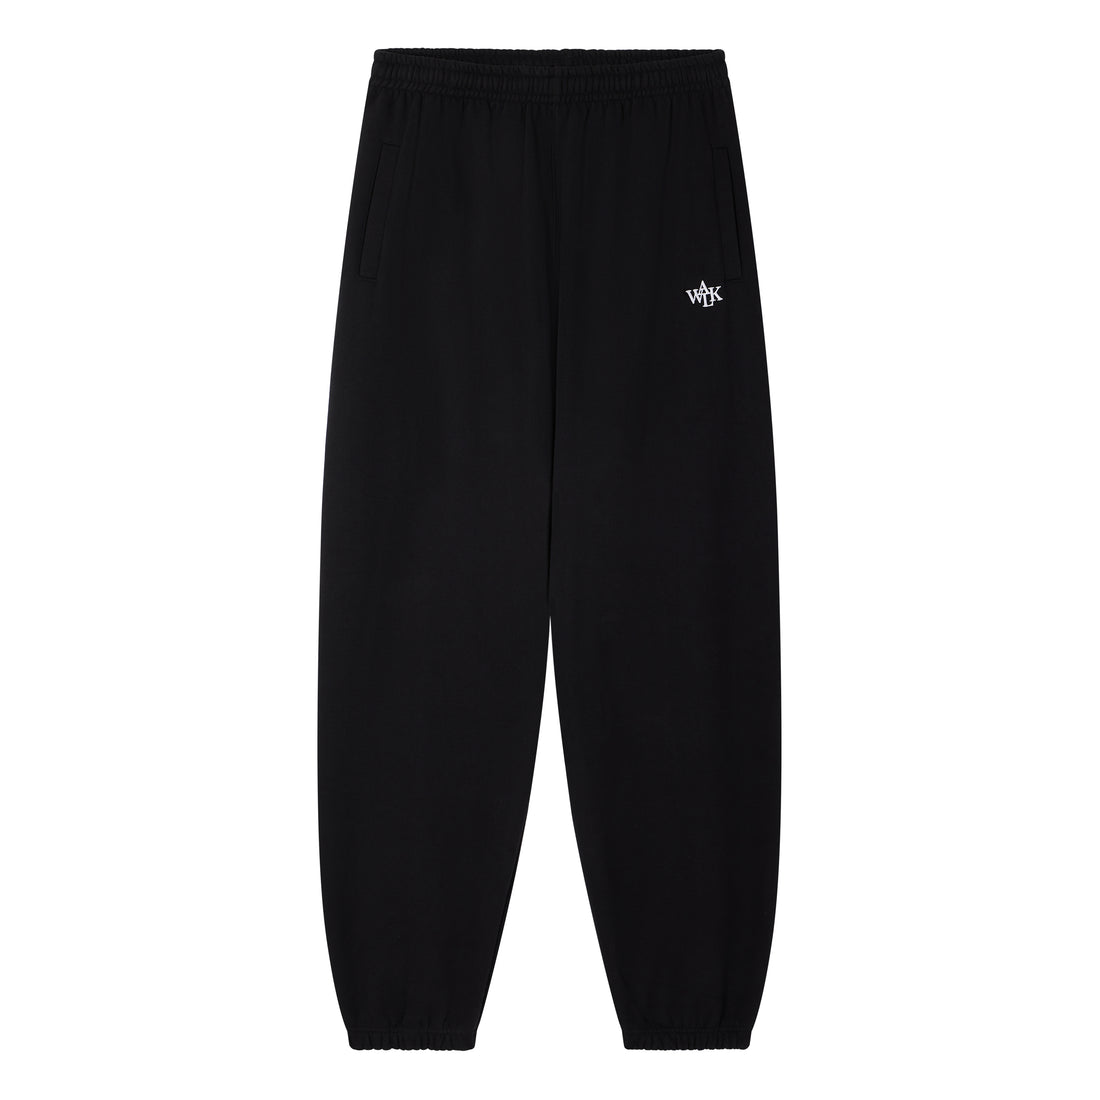 The black fleece jogging pants